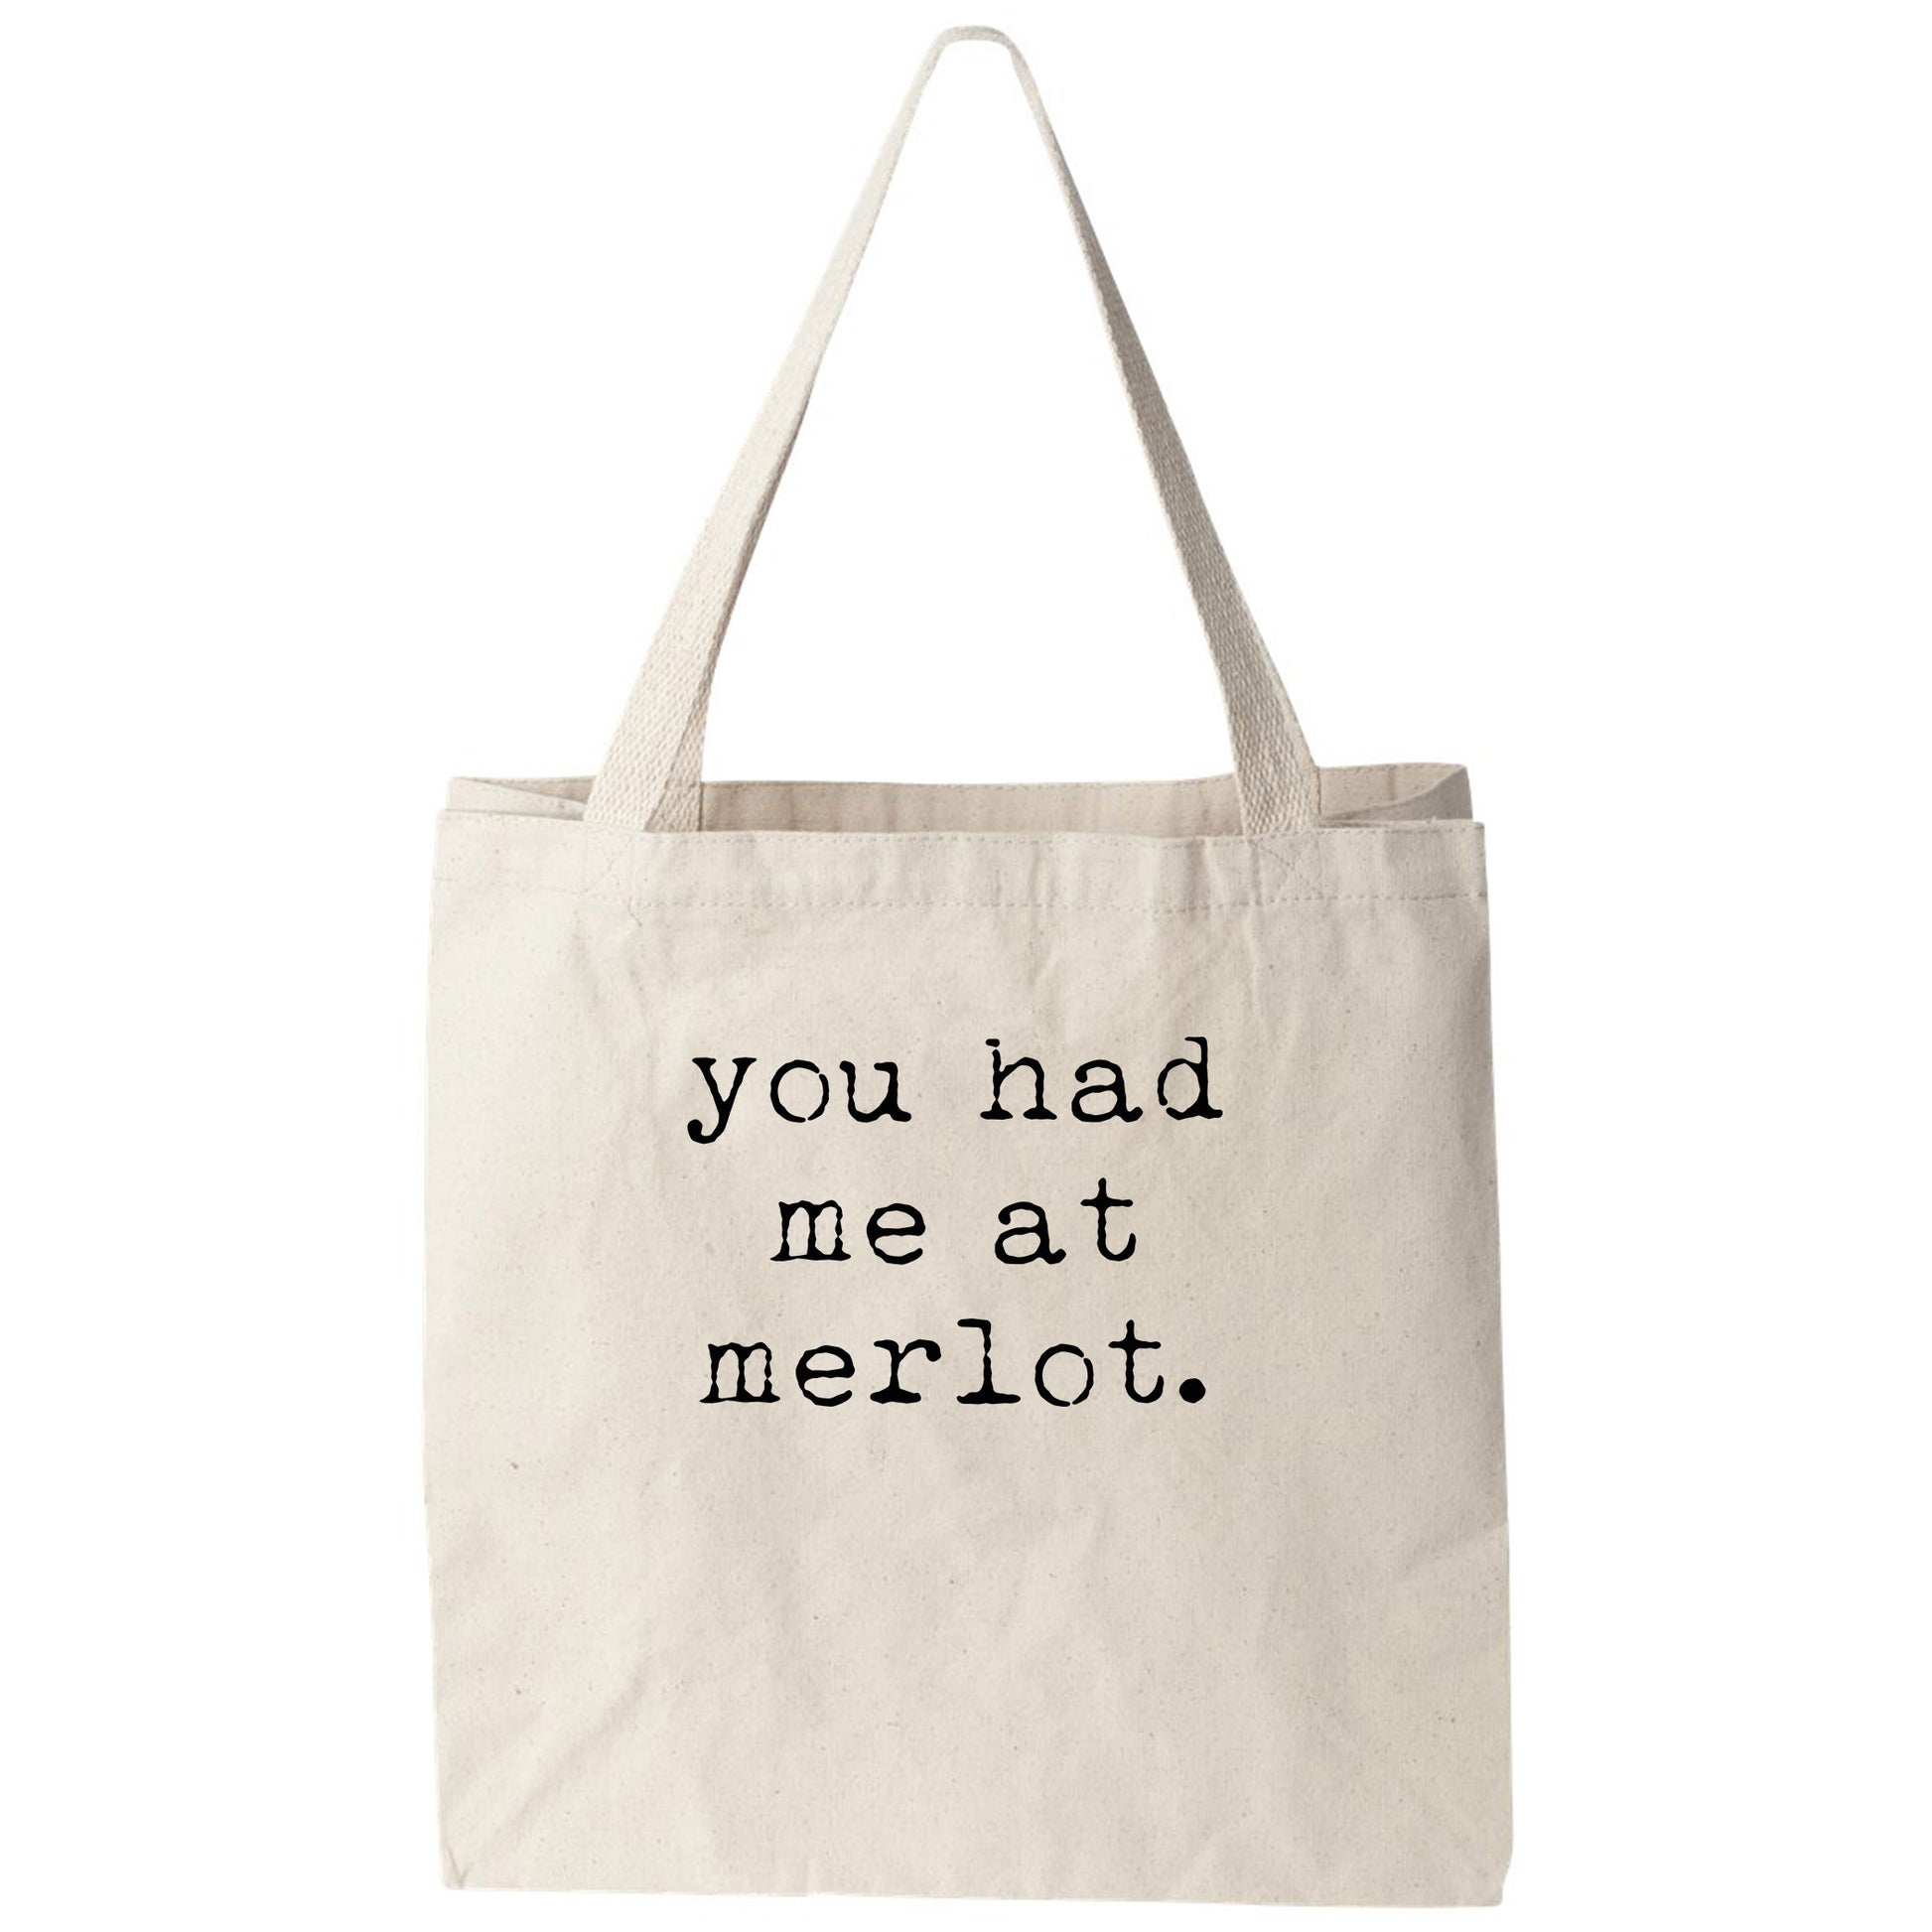 a tote bag that says you had me at merlot